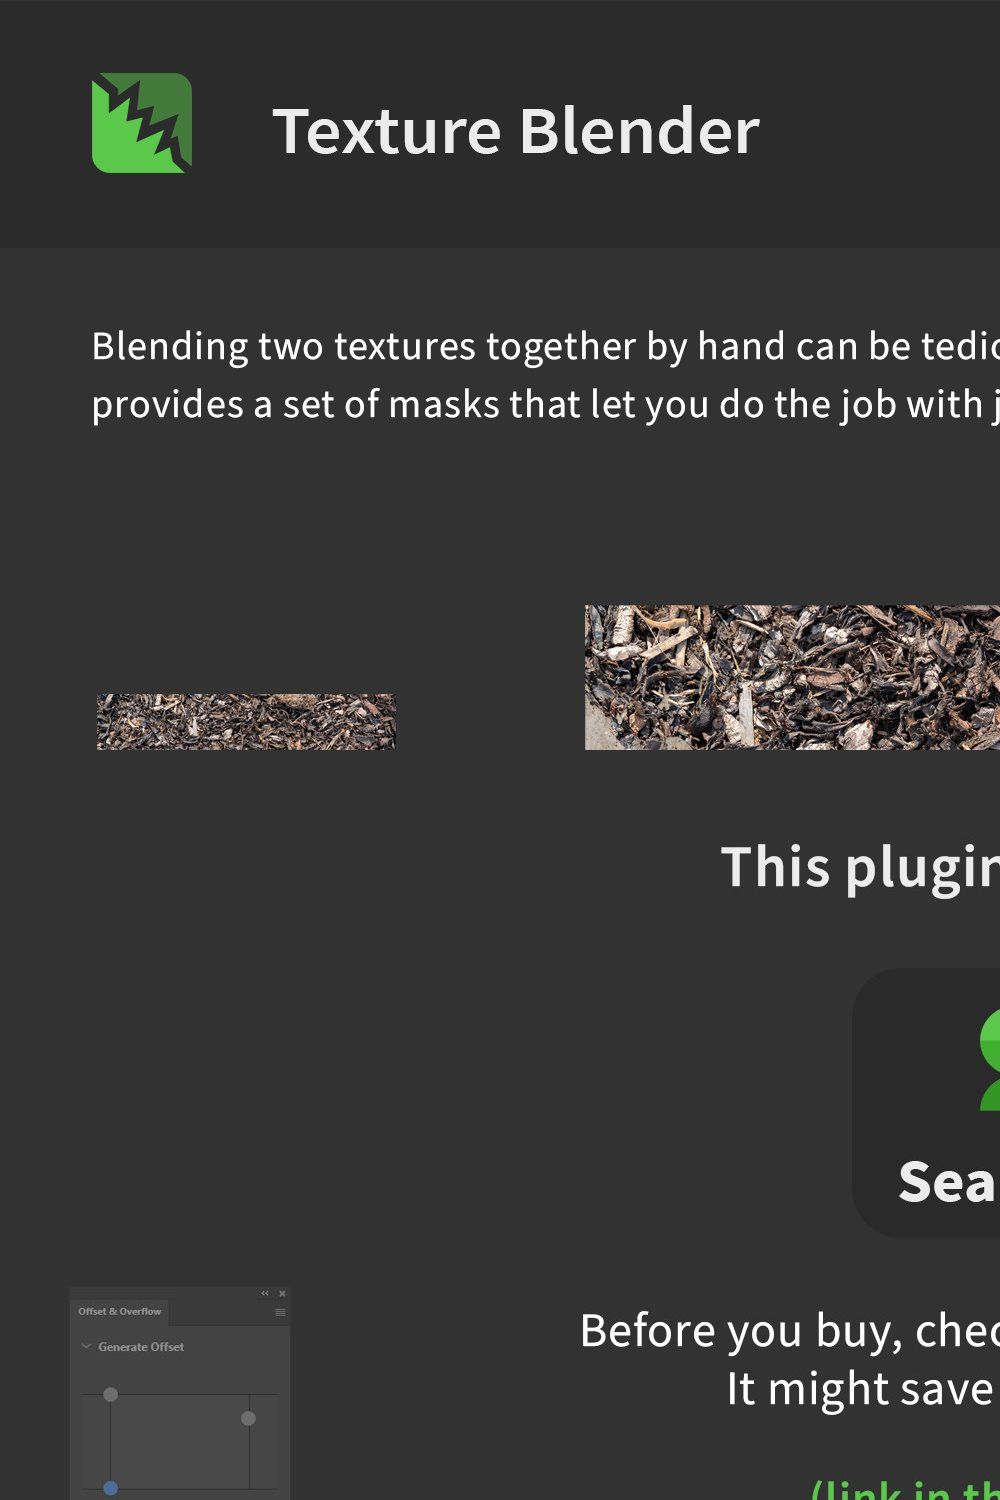 Texture Blender - Mix Two Textures pinterest preview image.